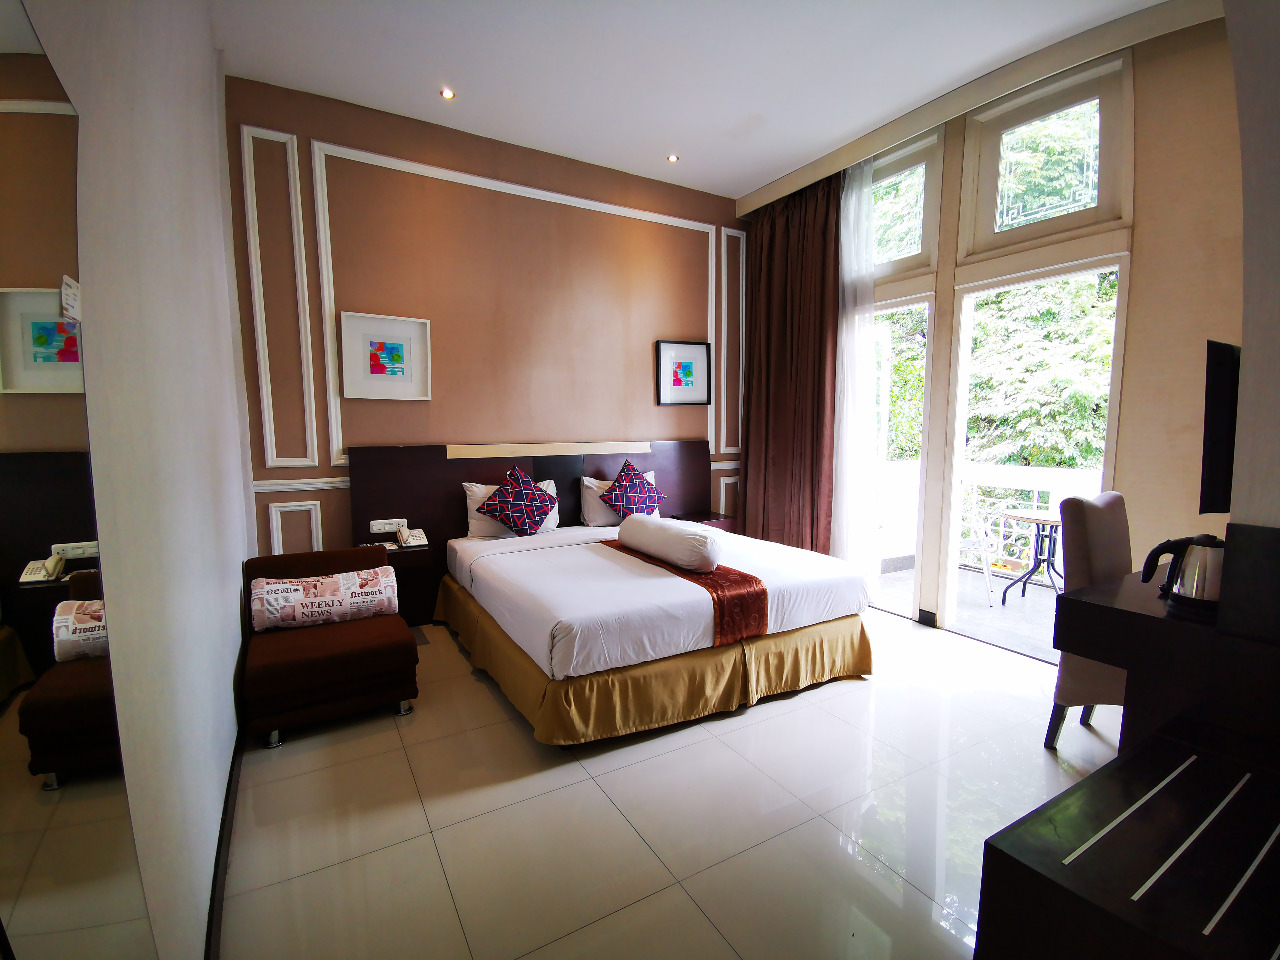 Bedroom 1, Vio Hotel Cimanuk, Bandung